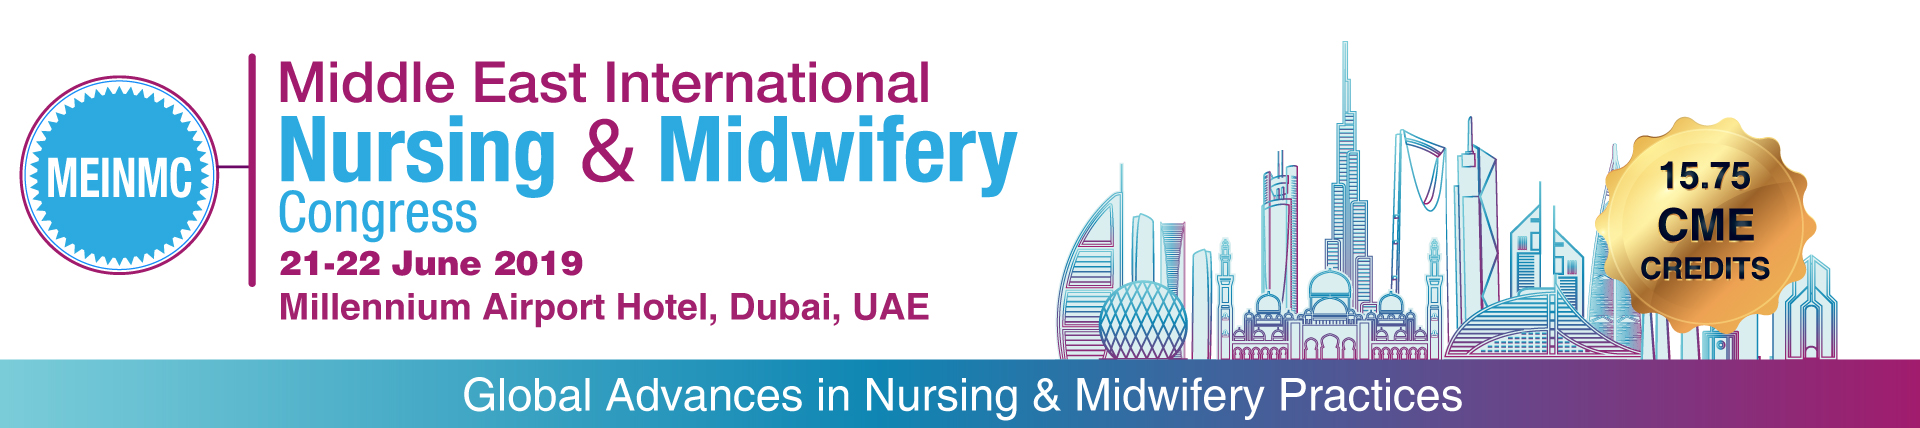 Middle East International Nursing & Midwifery Congress, Dubai, United Arab Emirates